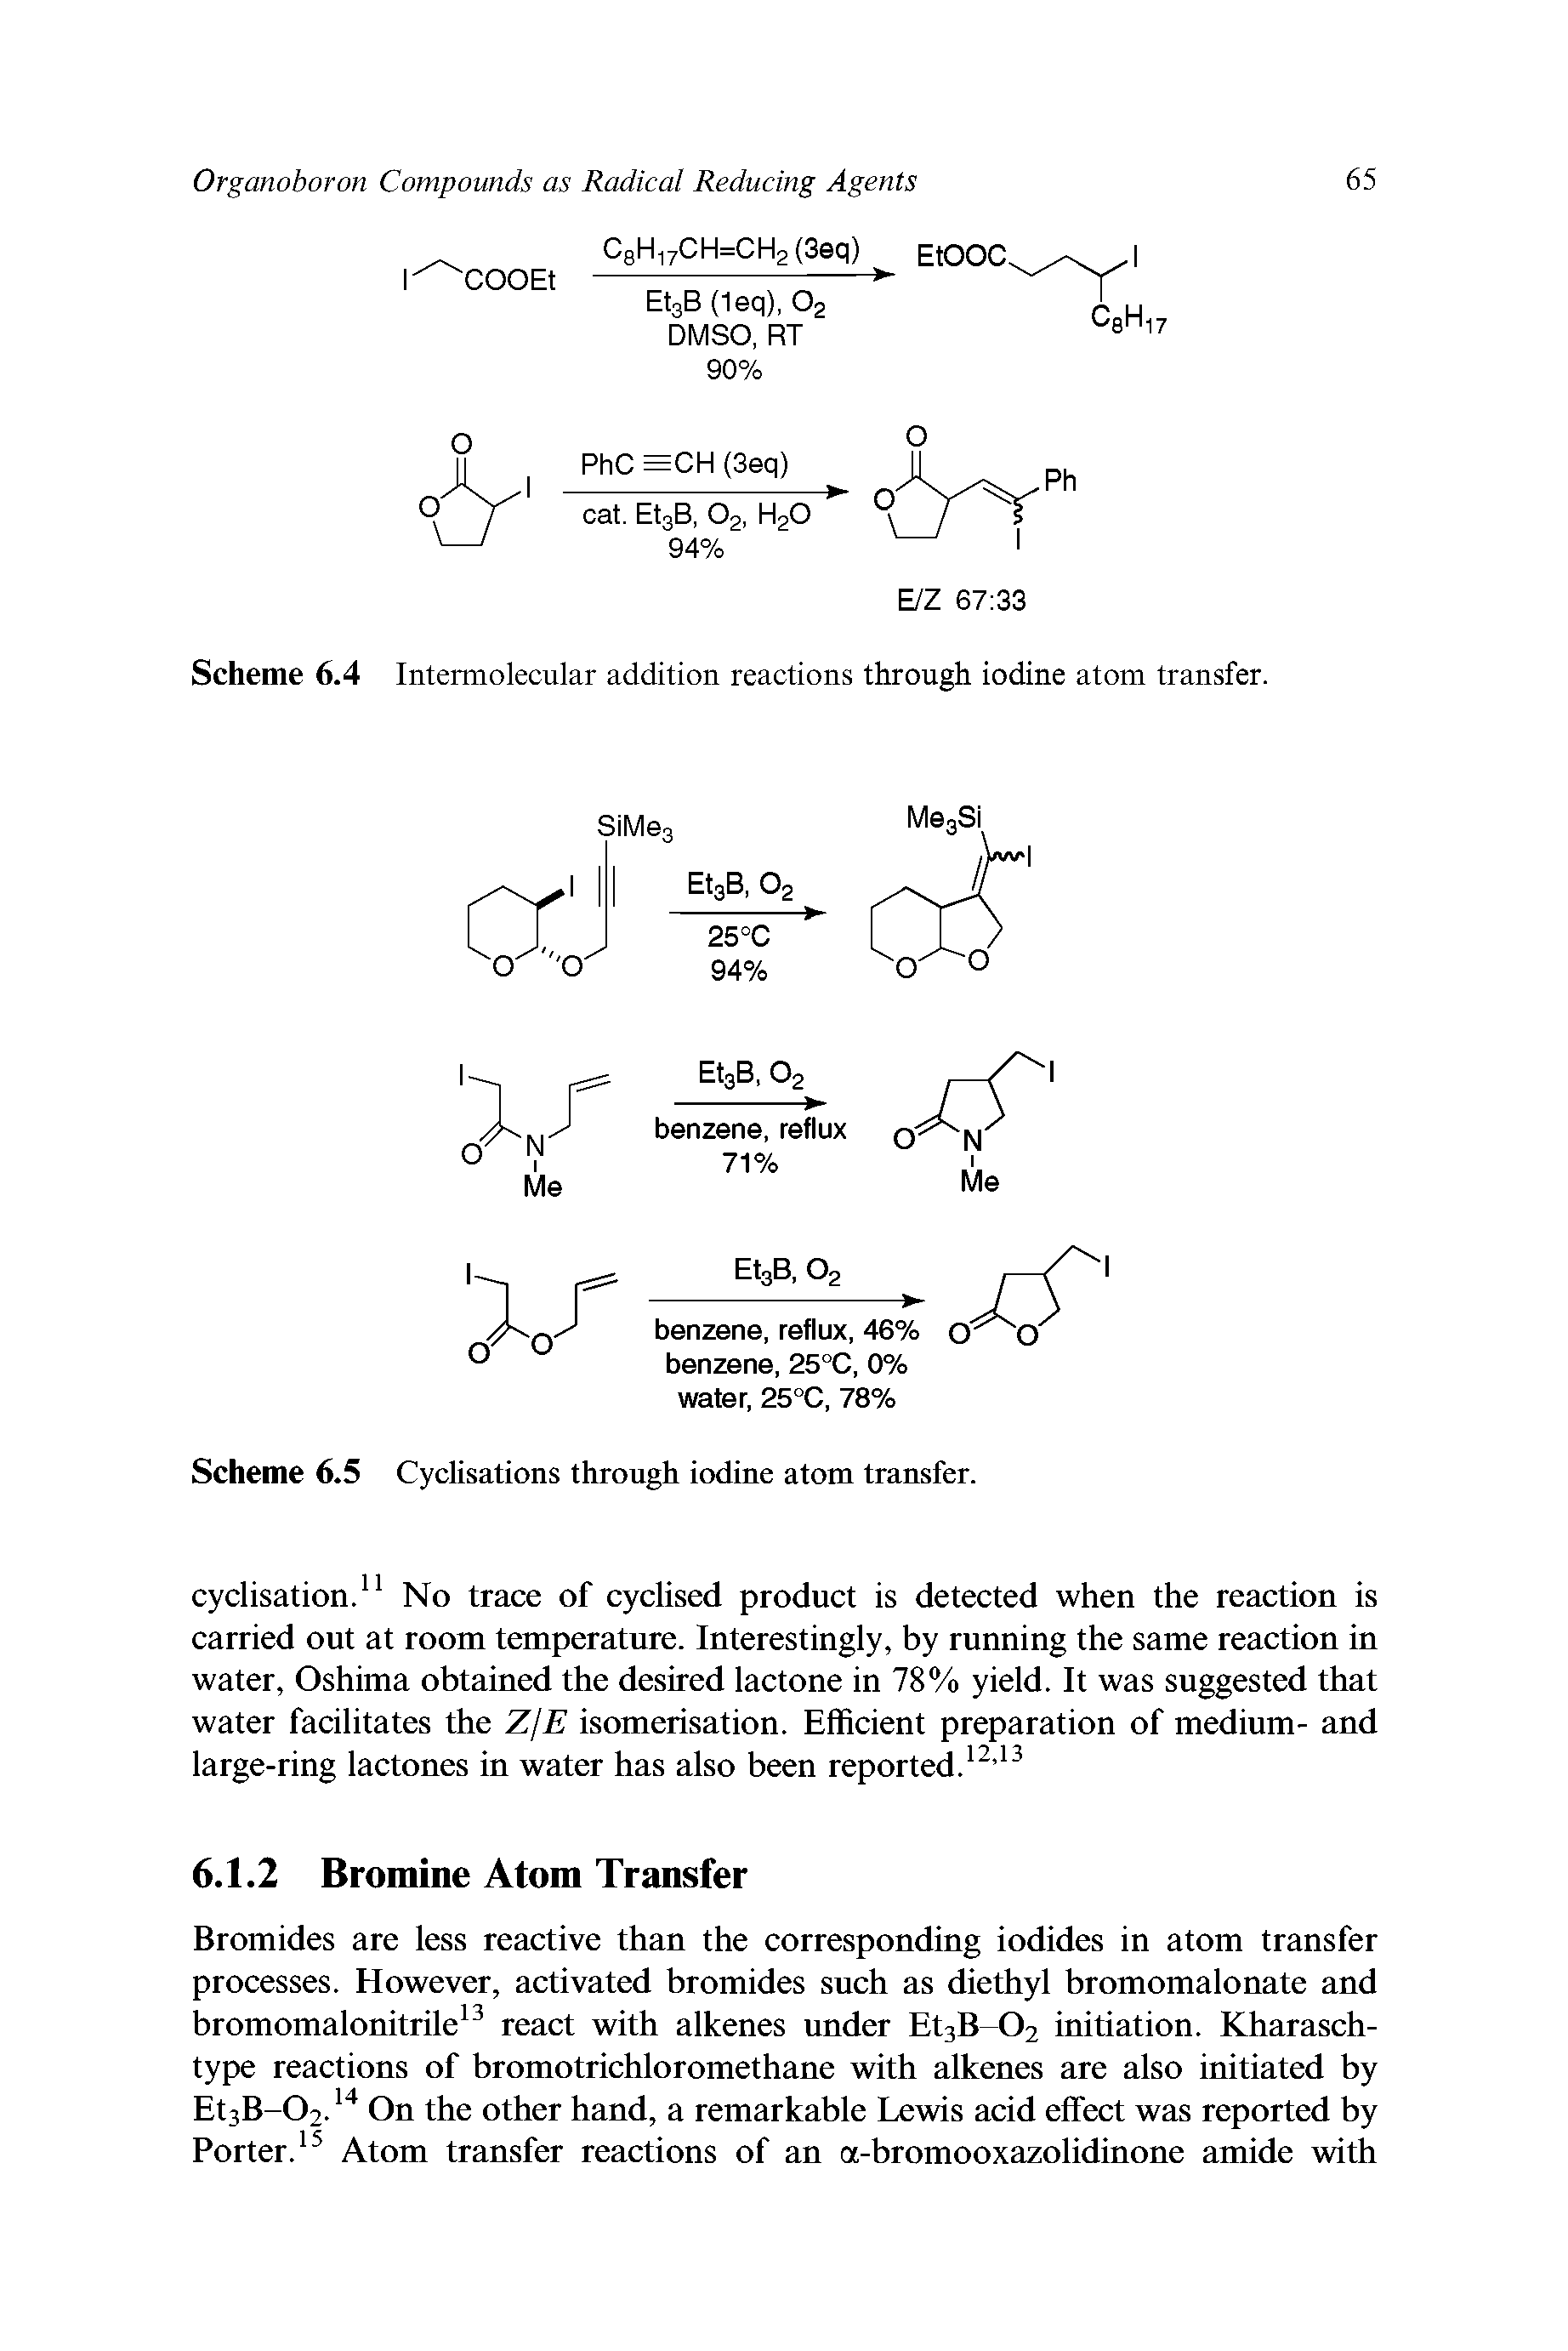 Scheme 6.4 Intermolecular addition reactions through iodine atom transfer.